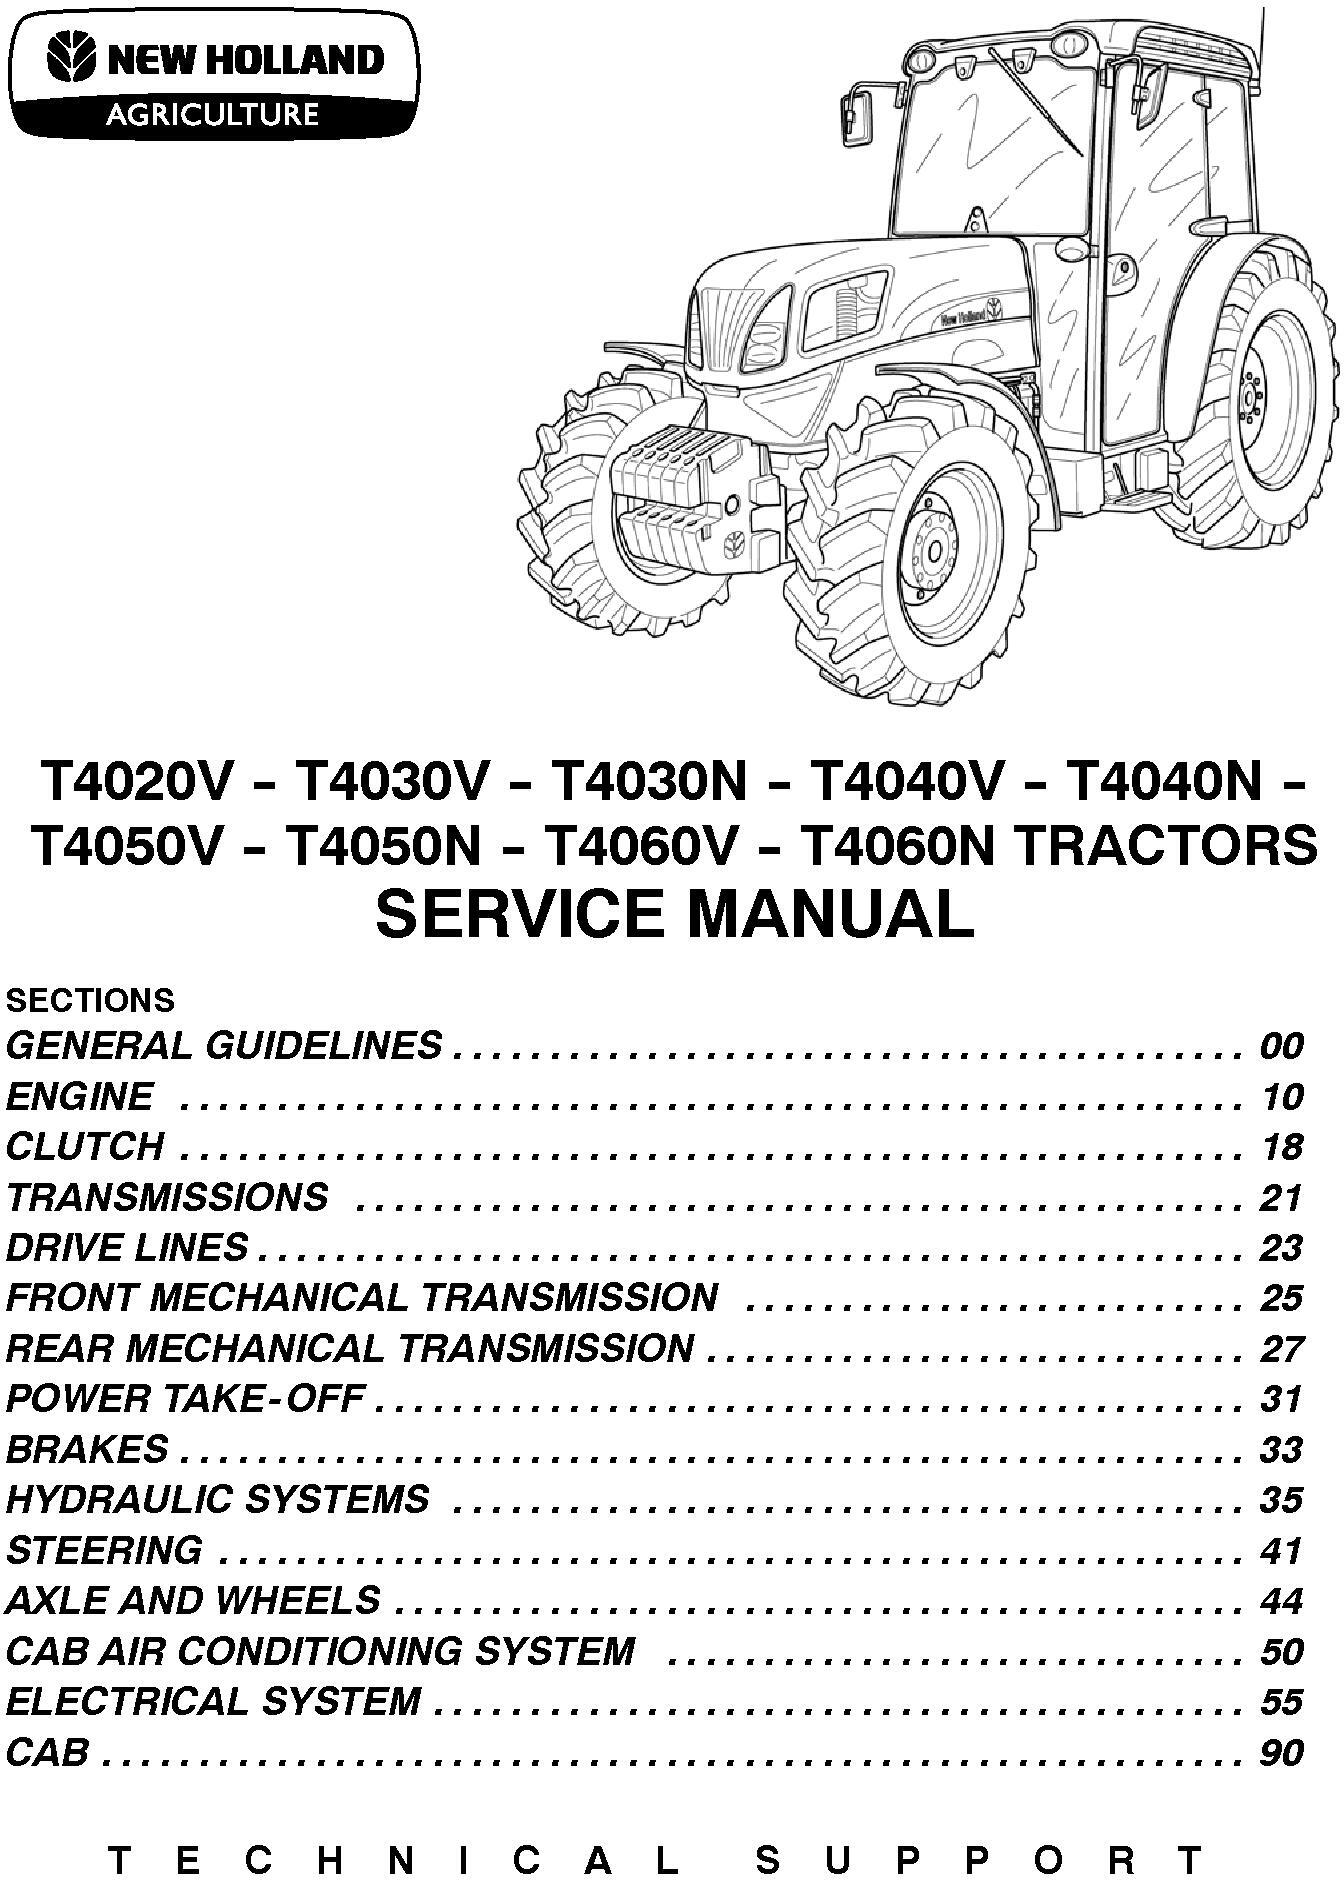 New Holland T4020V, T4030V/N, T4040V/N, T4050V/N, T4060V/N Tractor Service Manual - 1